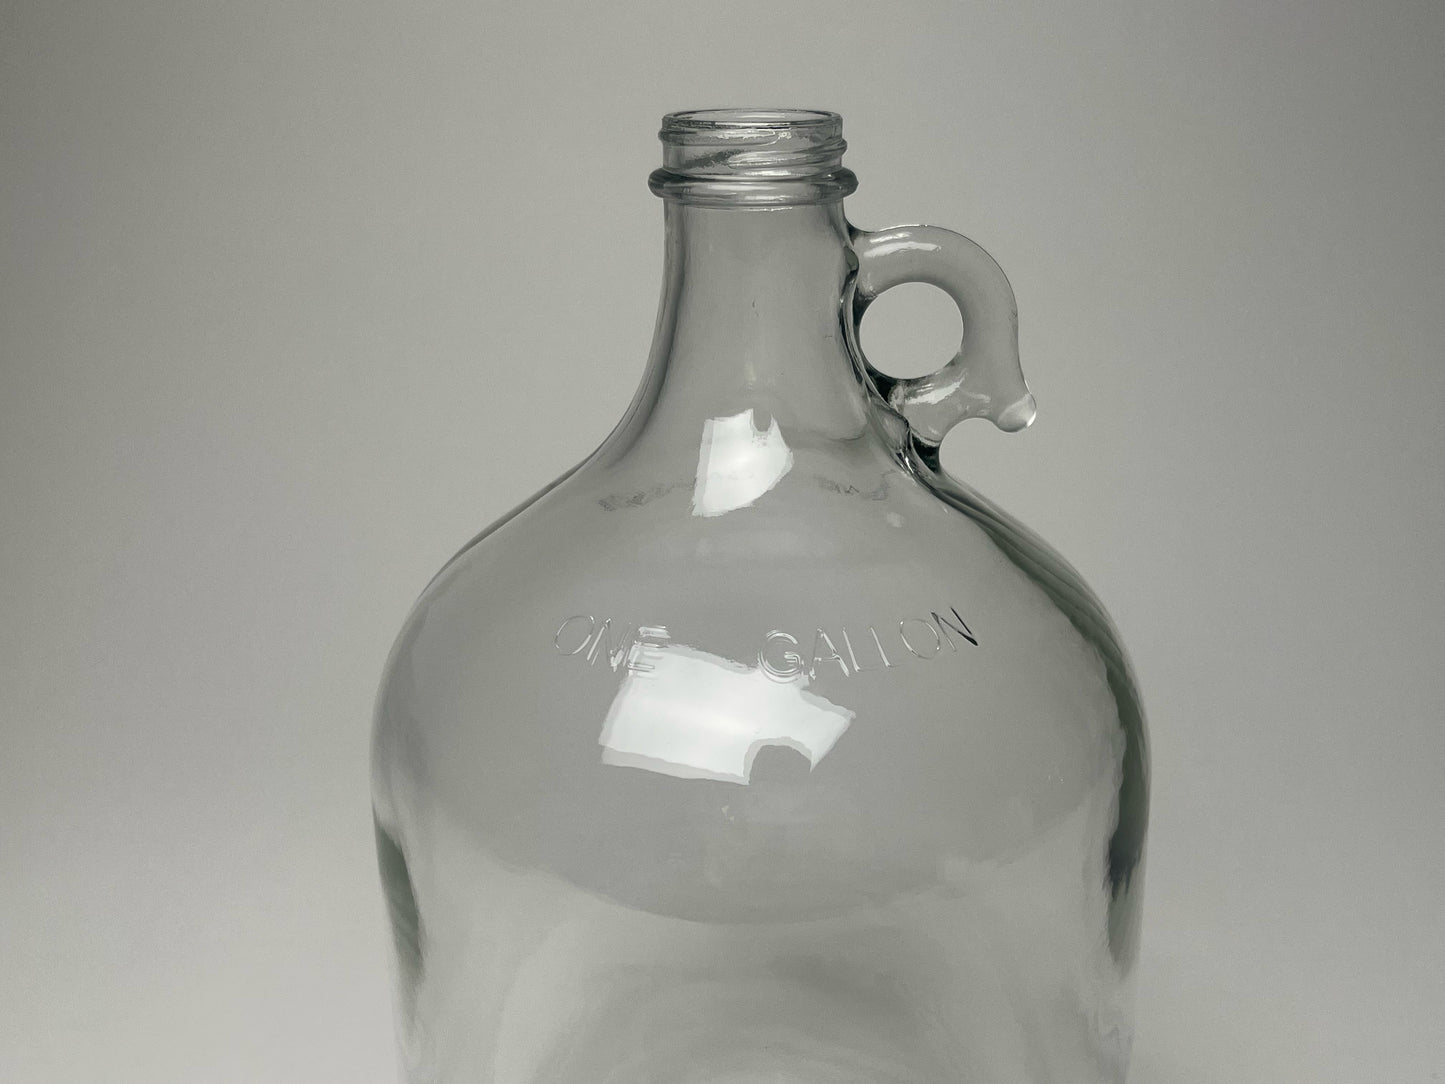 1 Gallon Clear Glass Jug with Finger Handle - Liquid Bottles LLC